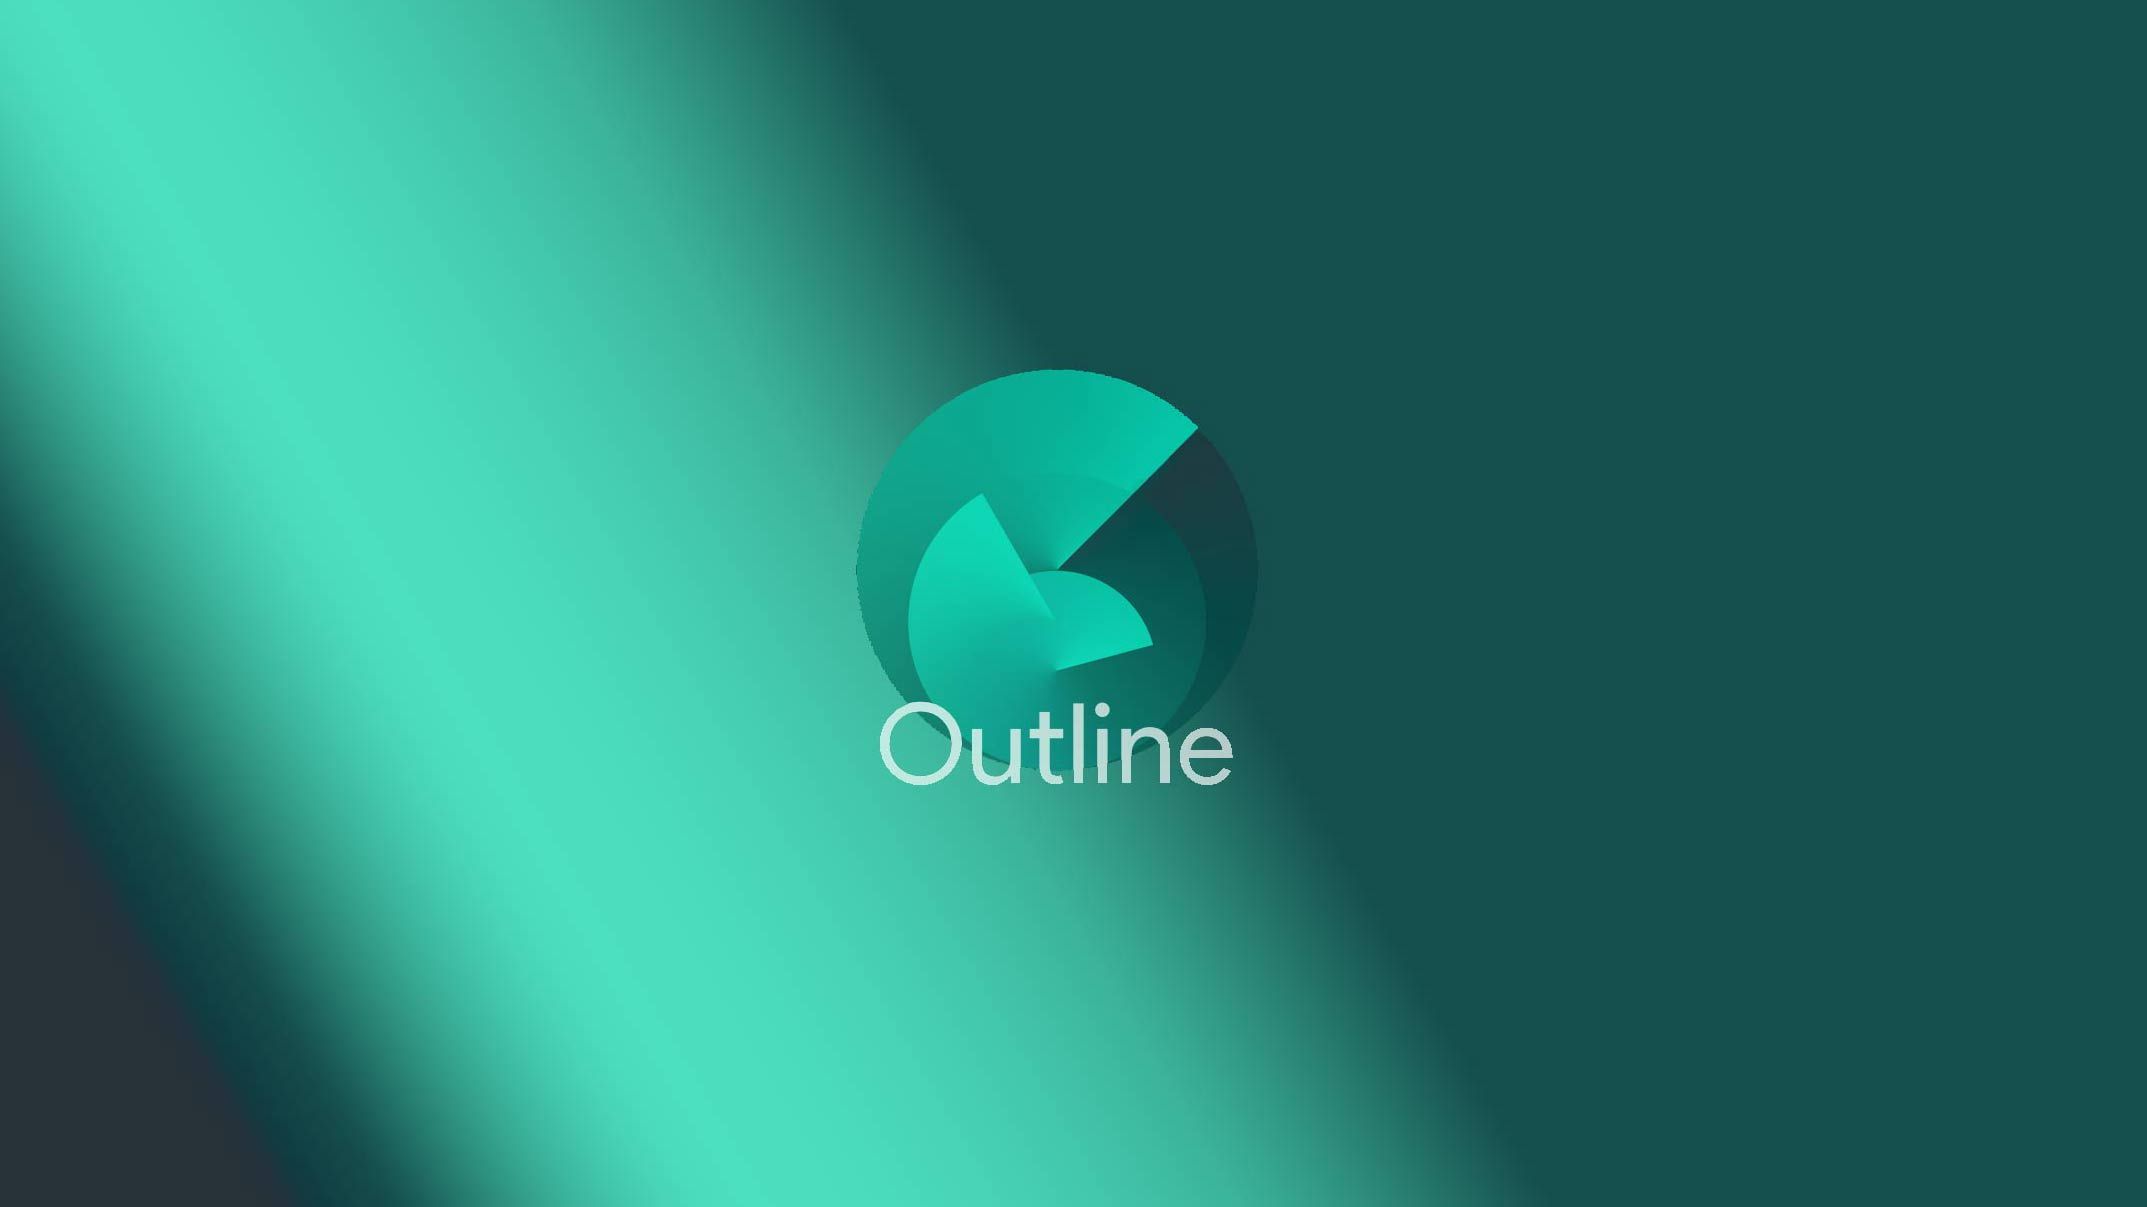 The Google Outline VPN logo sits against a green background